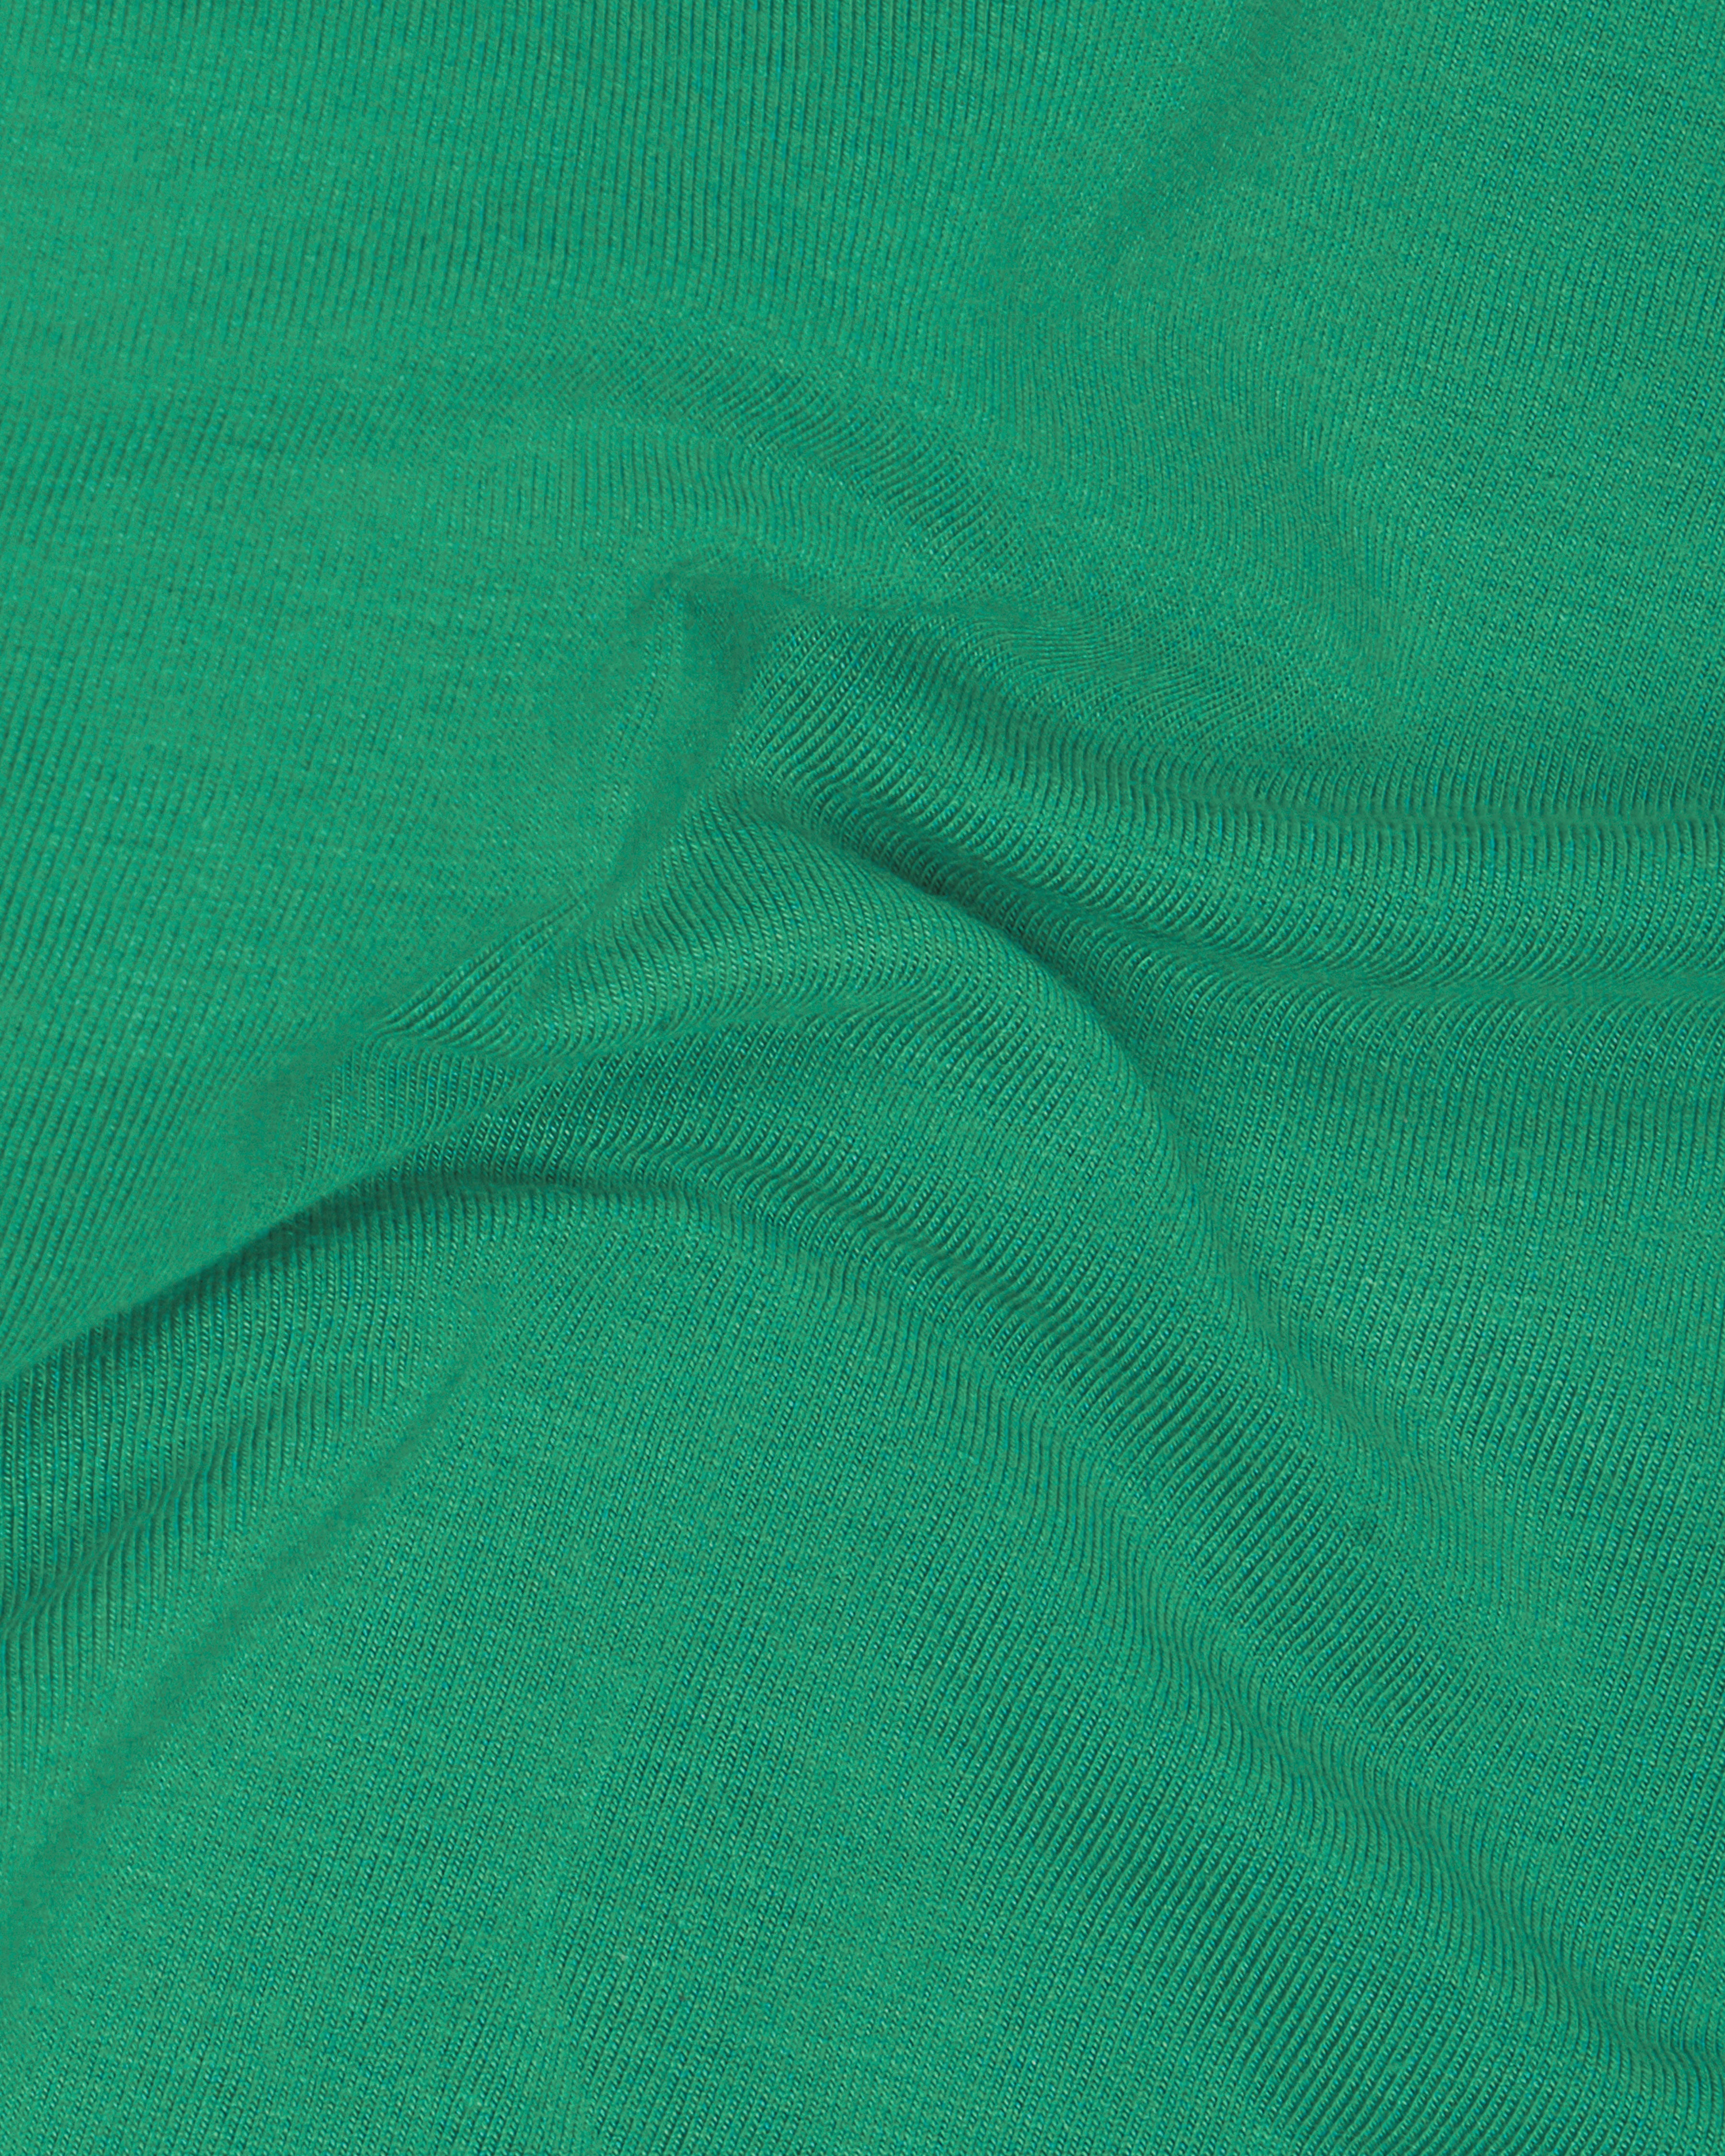 Eucalyptus Green Rubber Printed Premium Viscose T-Shirt TS341-W01-S, TS341-W01-M, TS341-W01-L, TS341-W01-XL, TS341-W01-XXL